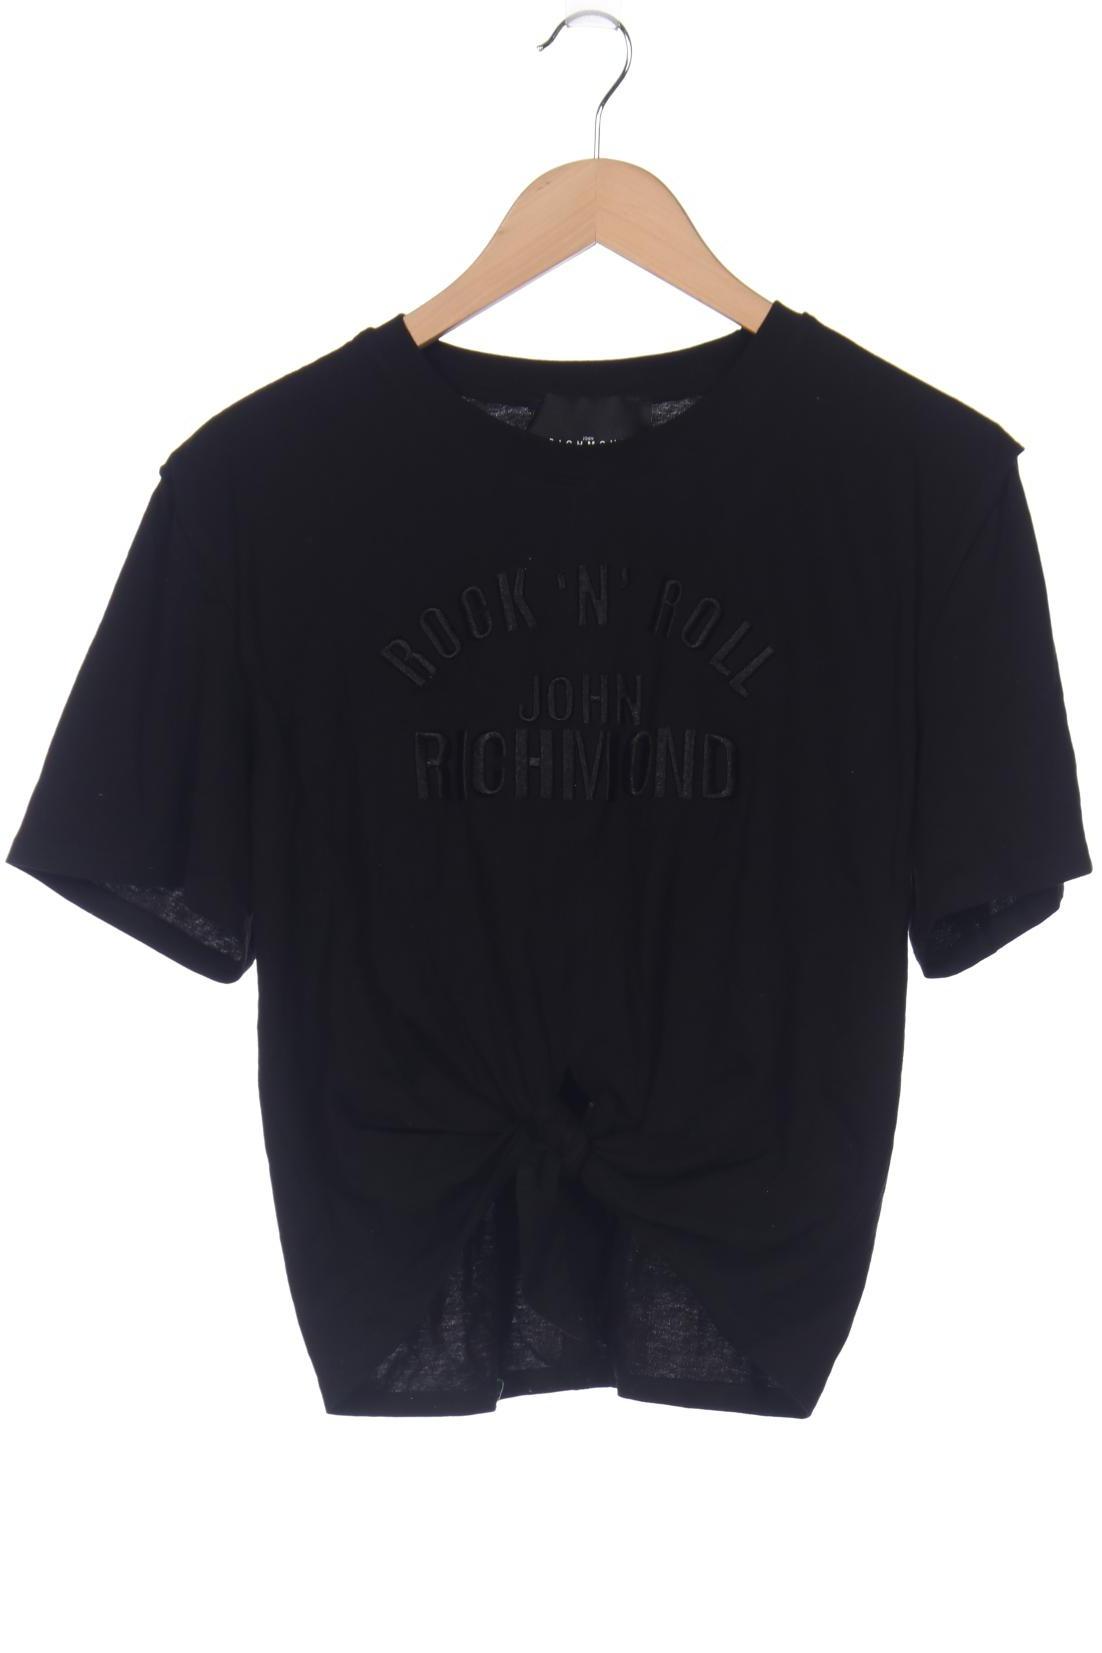 JOHN RICHMOND Damen T-Shirt, schwarz von John Richmond